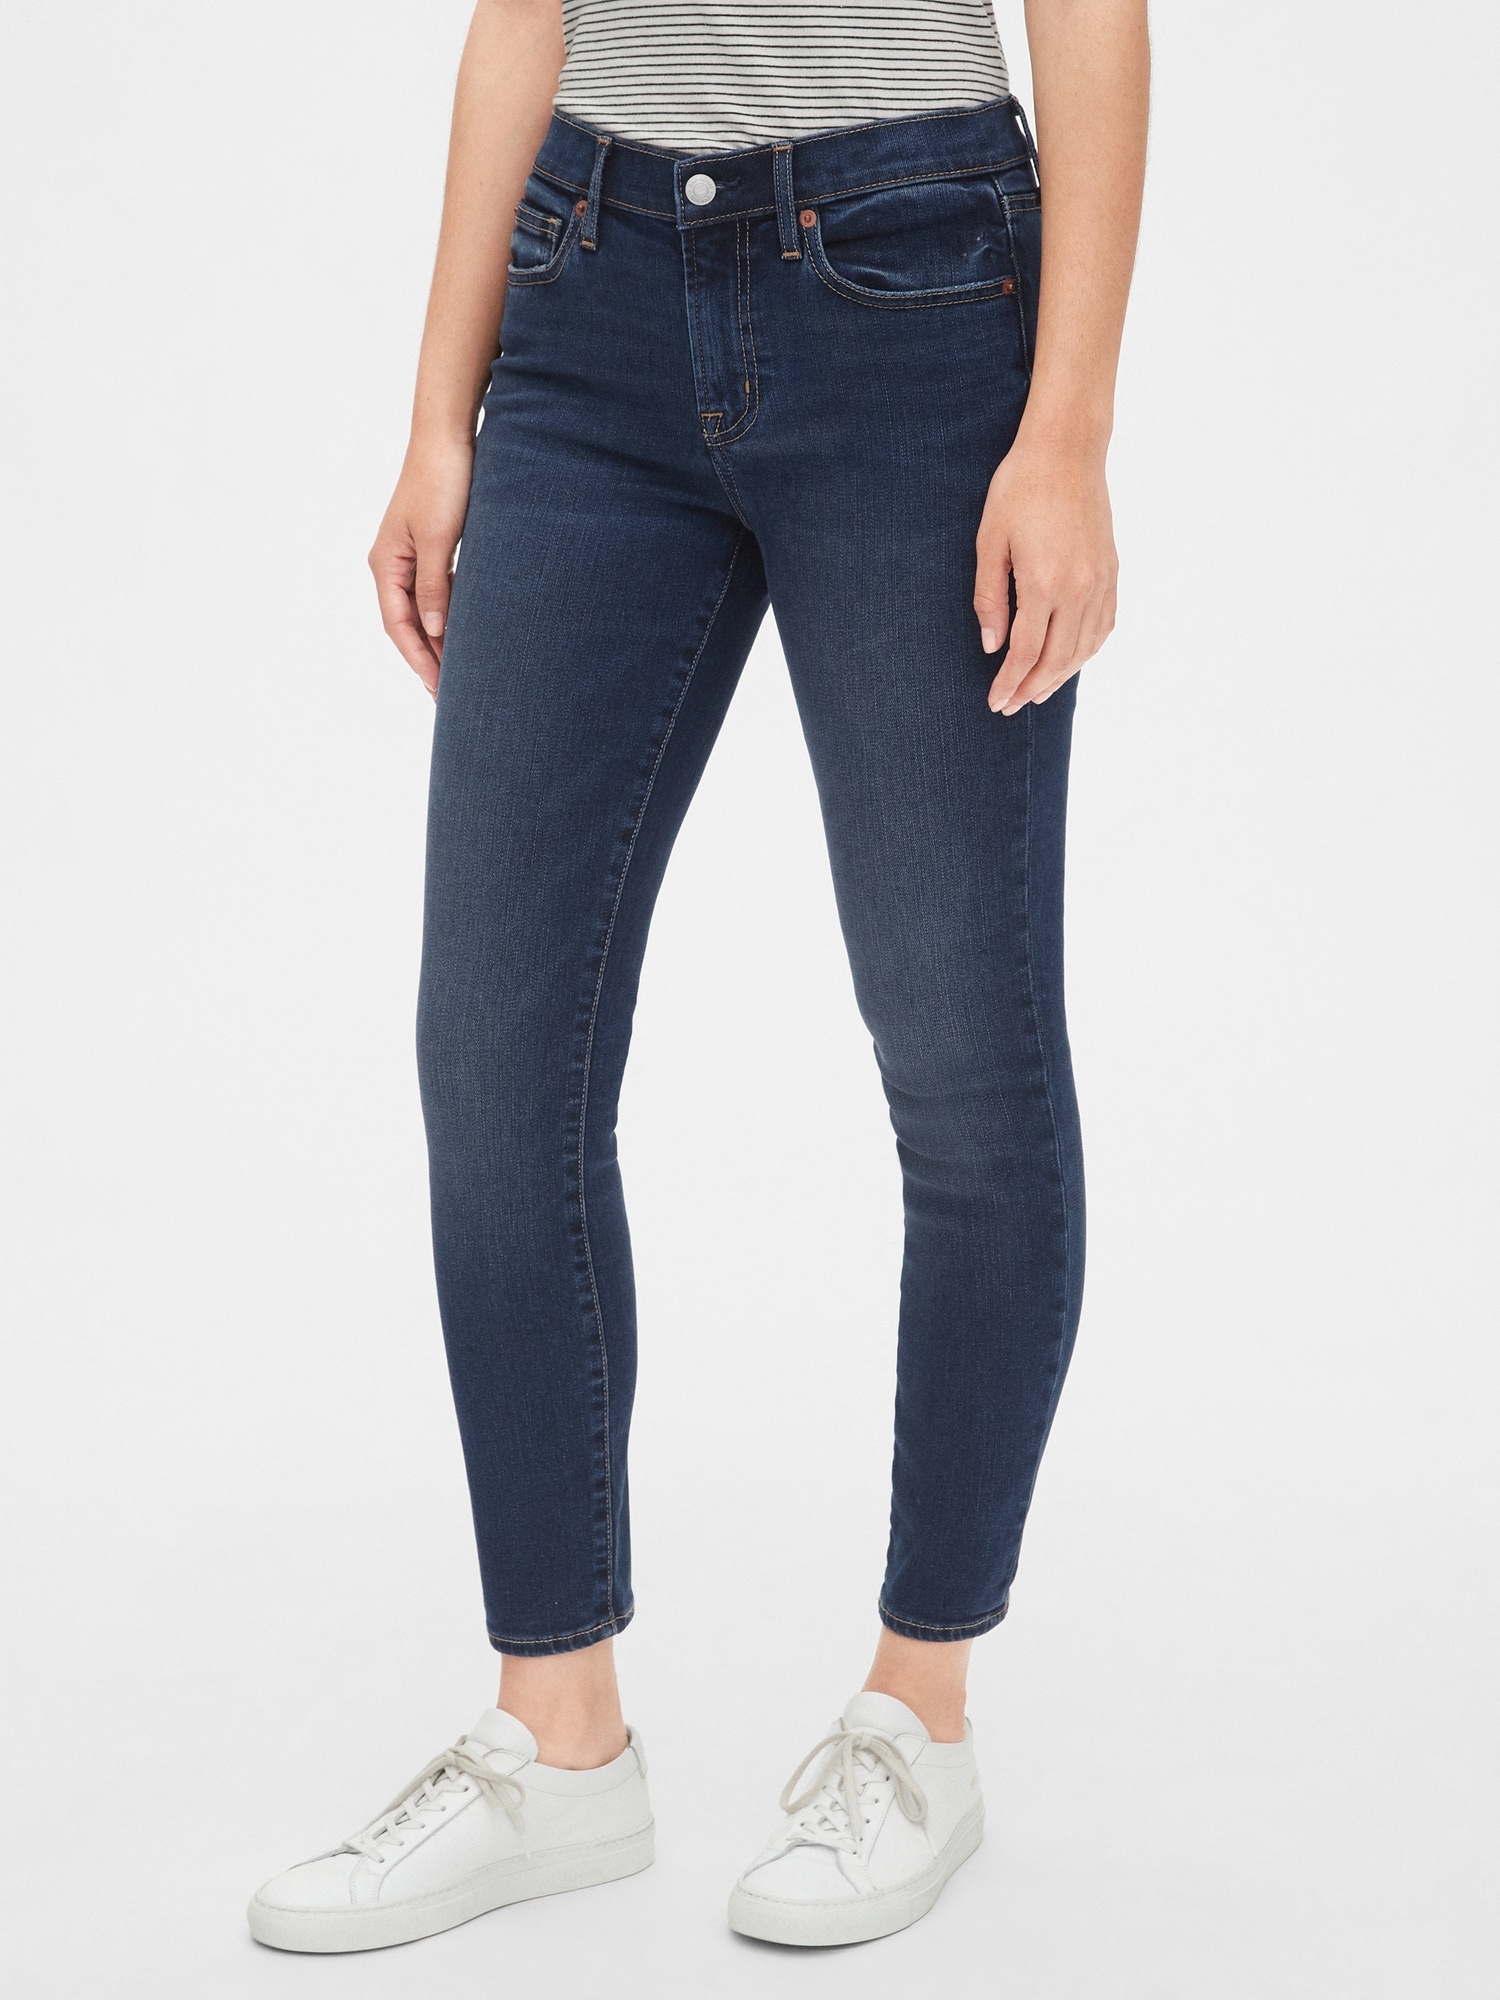 jeans top design girl